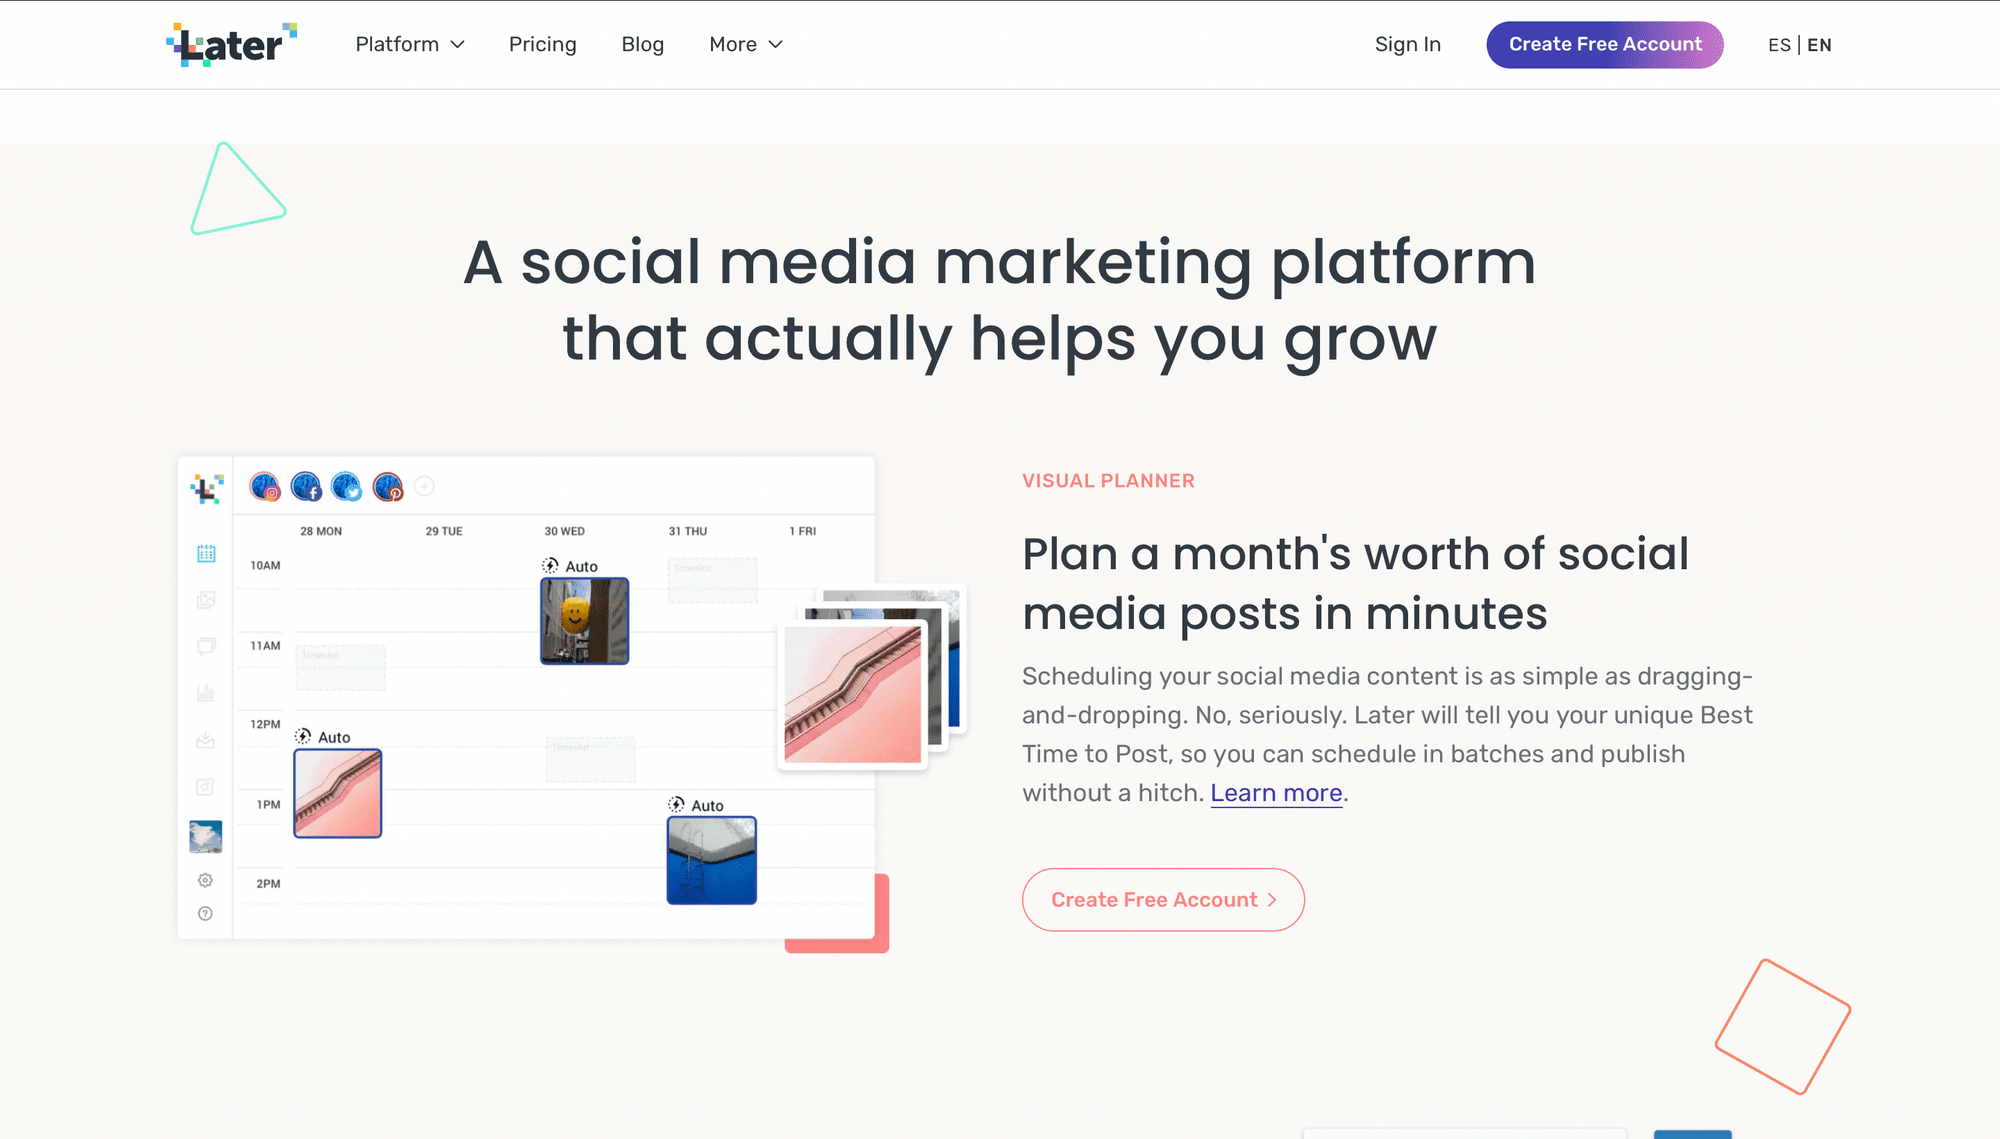 Later screenshot platform for social media